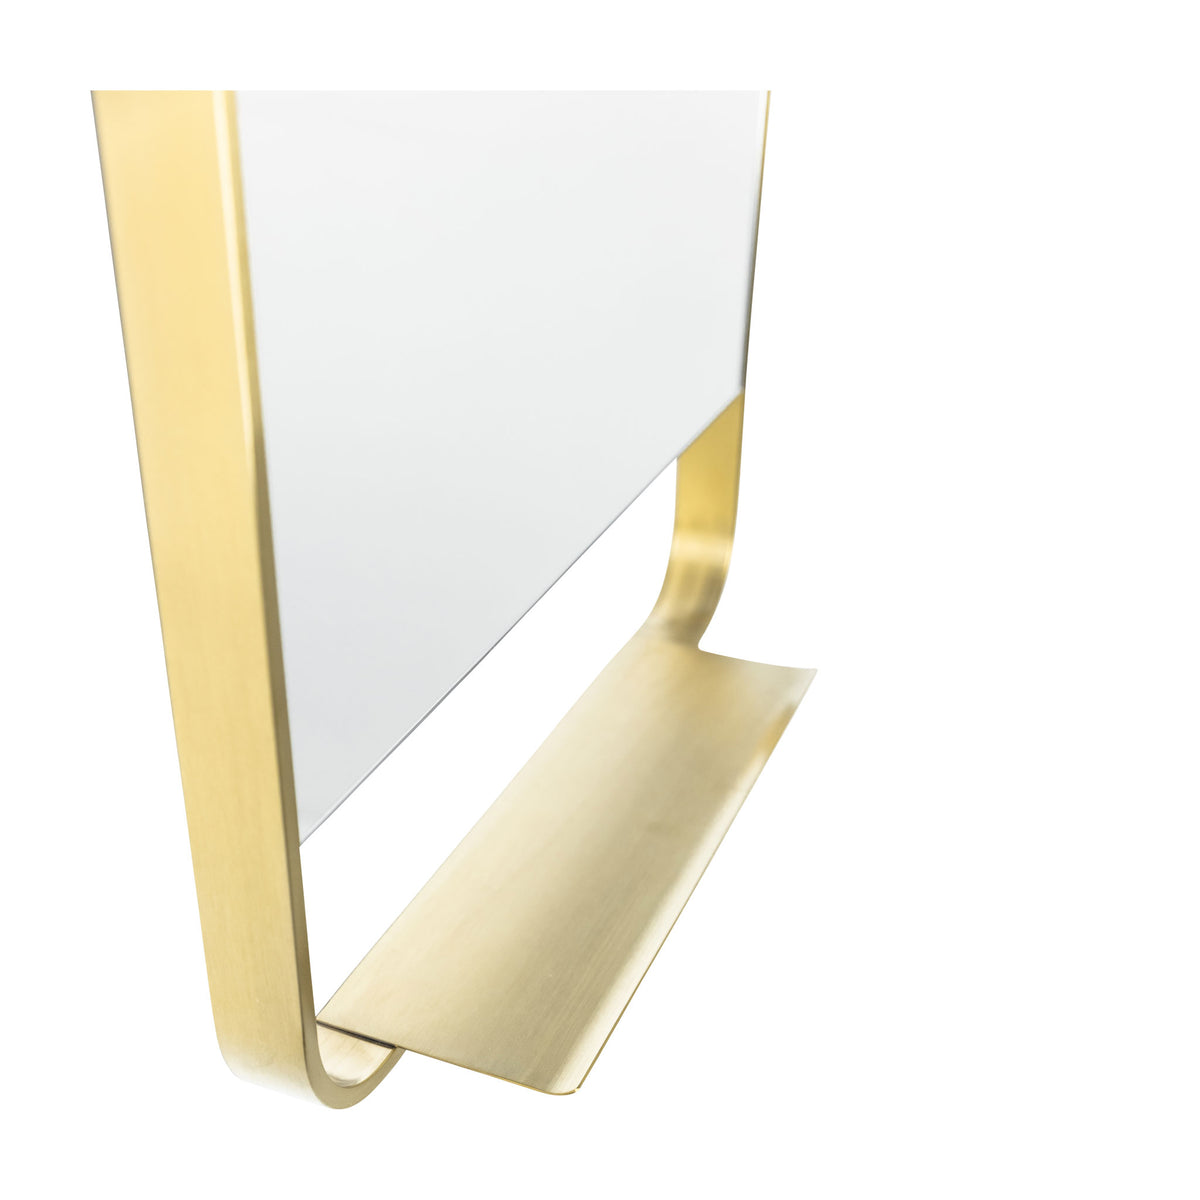 Lyon Brushed Brass Metal Bathroom Mirror - 550mm w x 1000mm h with shelf